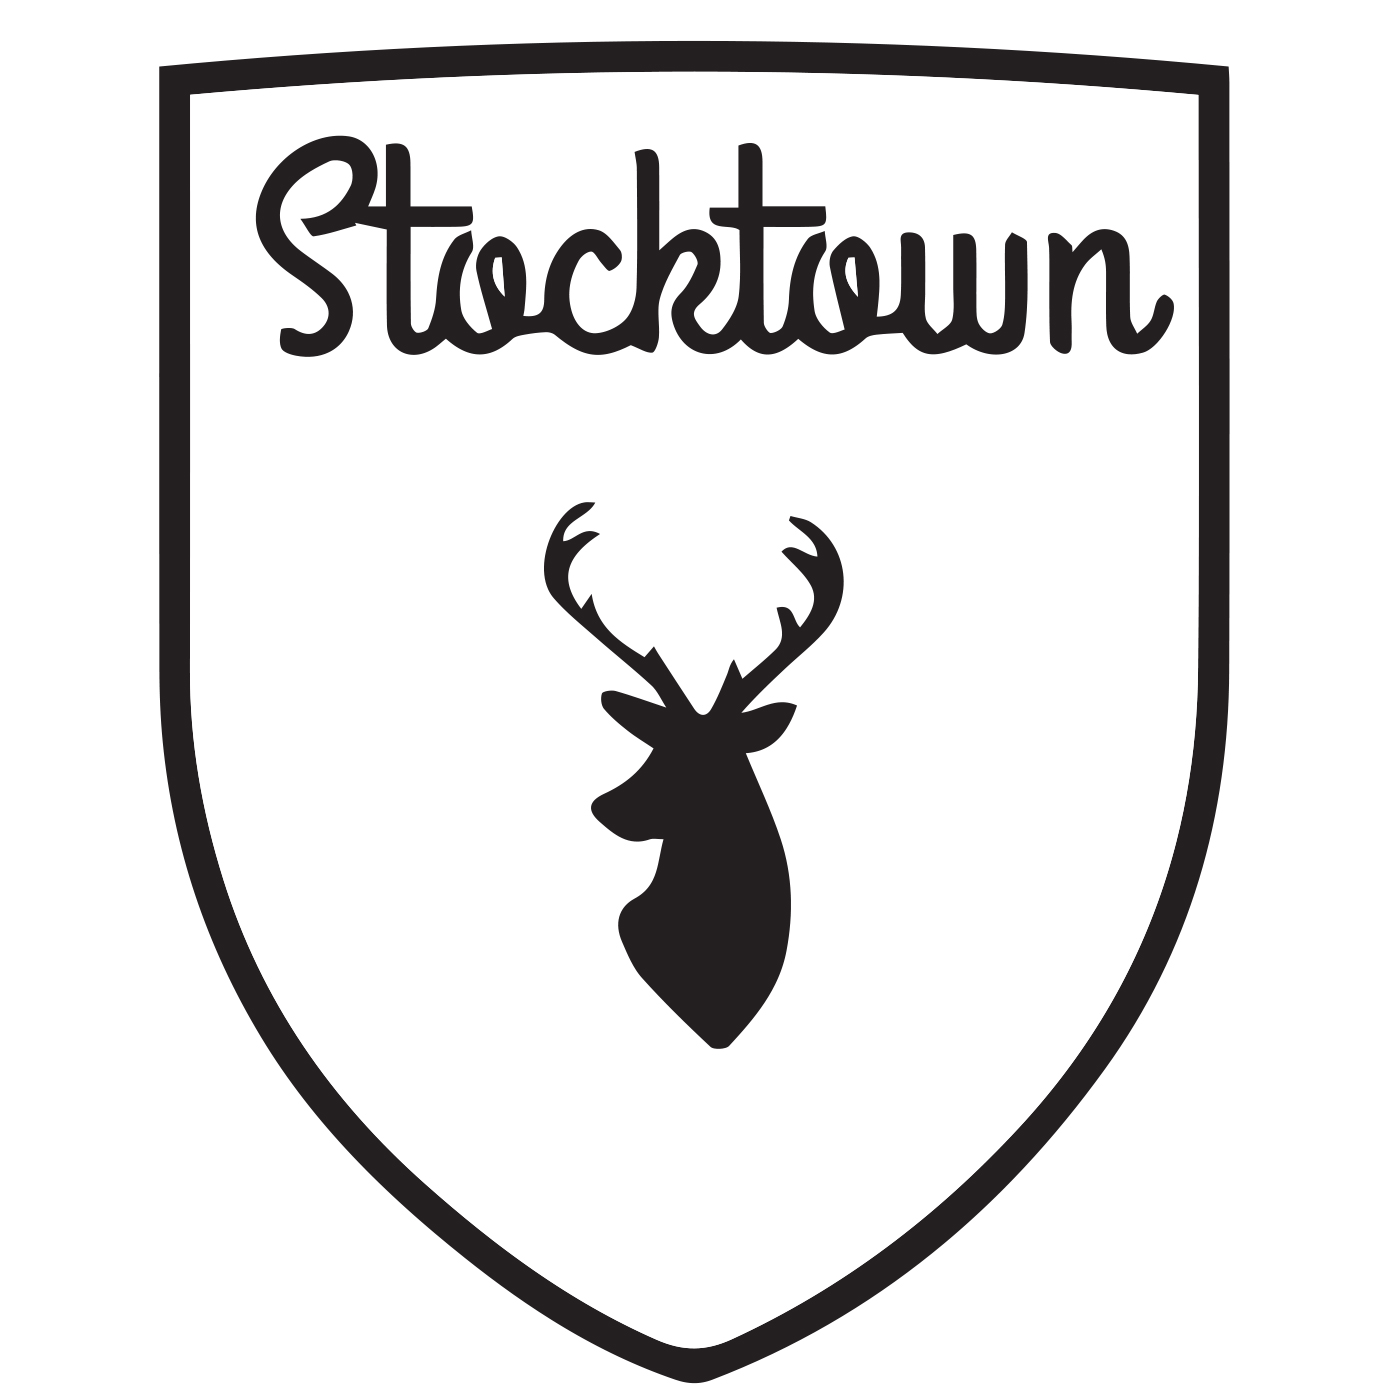 Stocktown Chronicles